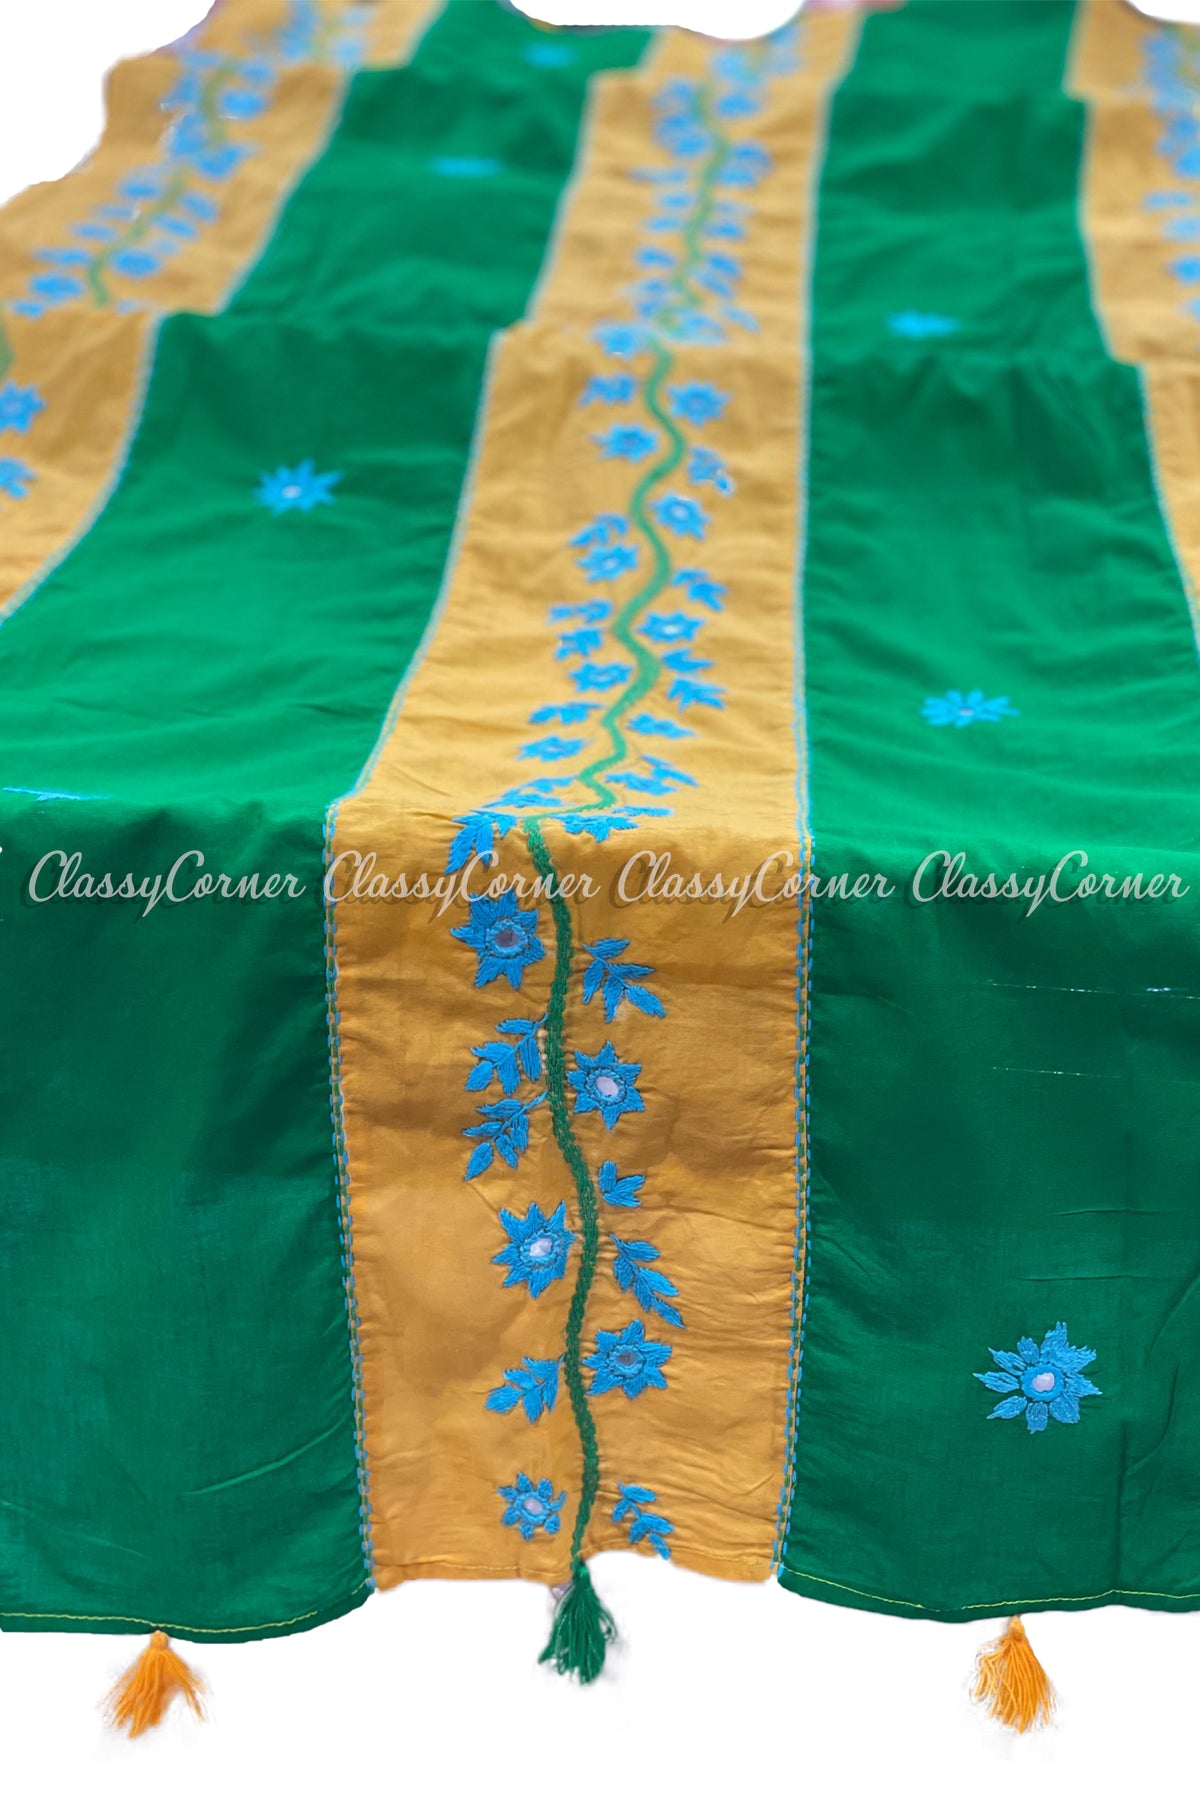 Green Yellow Hand Embroidered Cotton Salwar Kameez Suit - Classy Corner